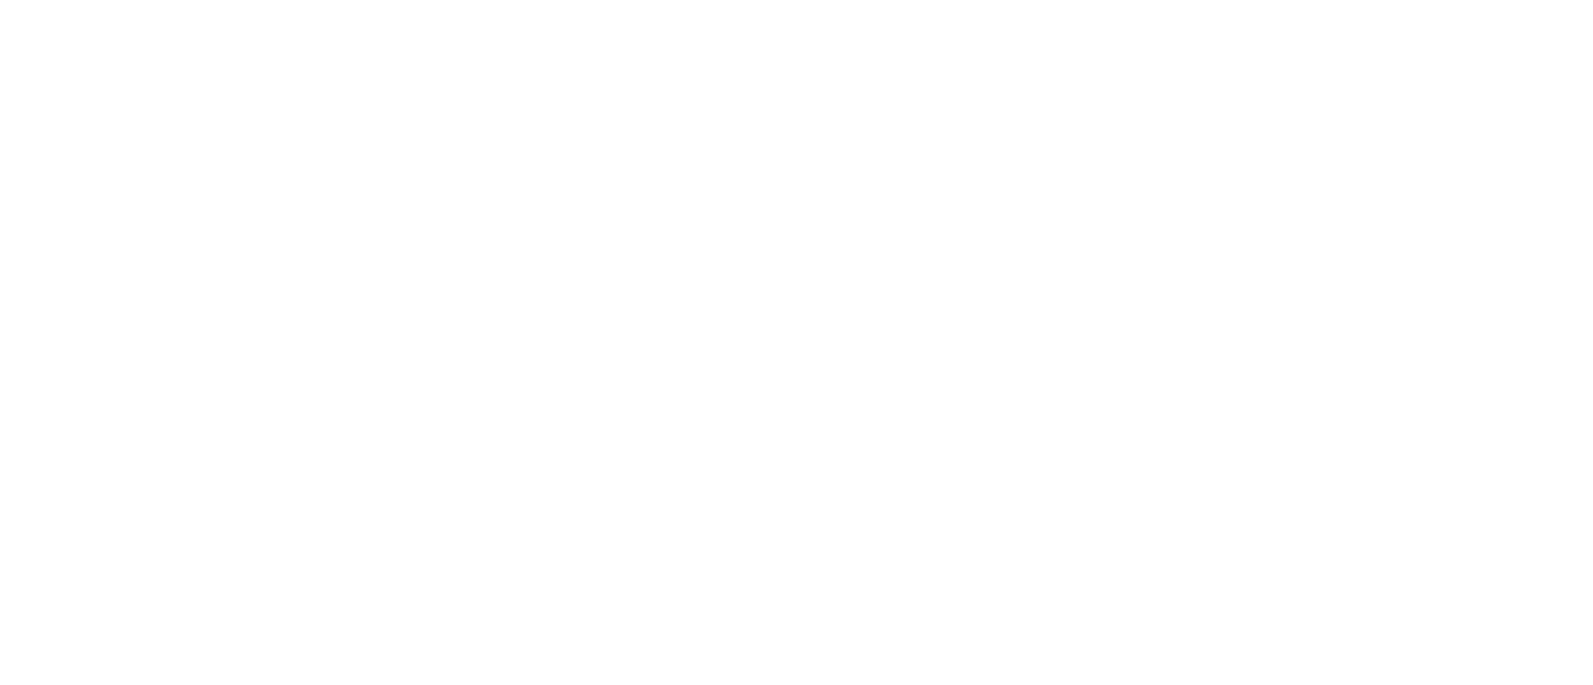 Intermediate Capital Group (ICG) logo pour fonds sombres (PNG transparent)